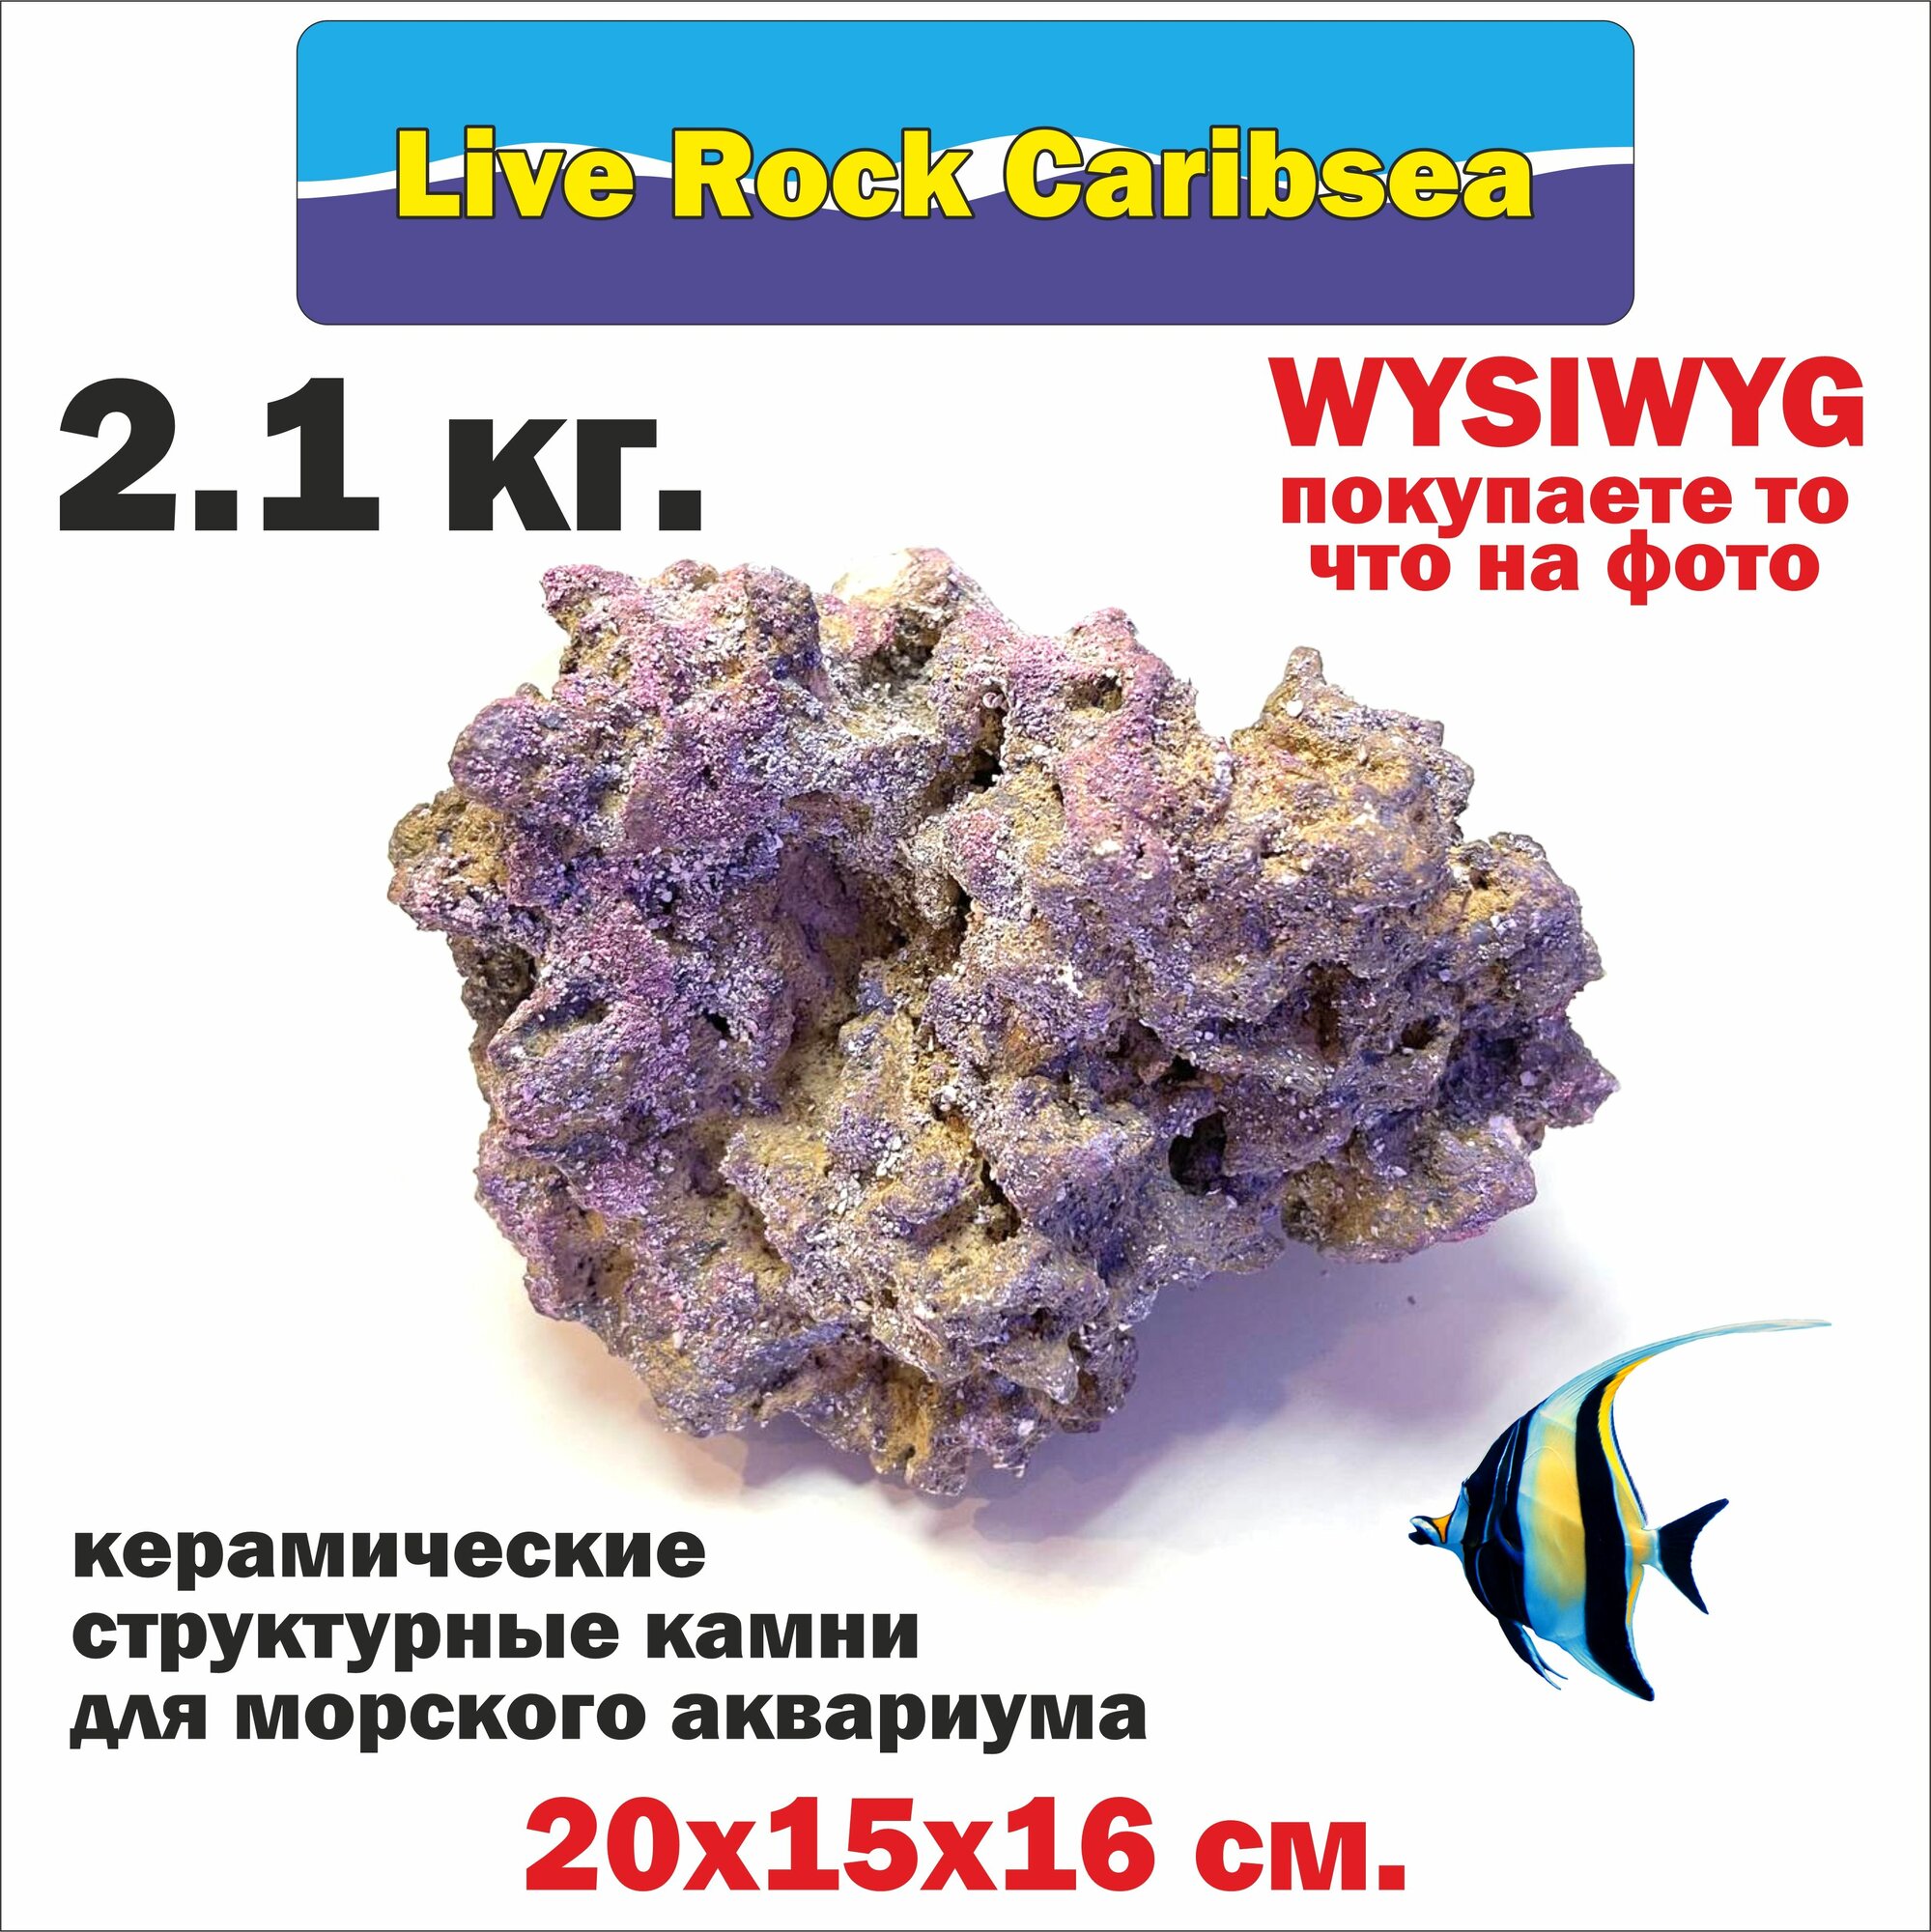 Камень для морского аквариума 2,1 кг./ Live rock Carib Sea/ сухой рифовый камень